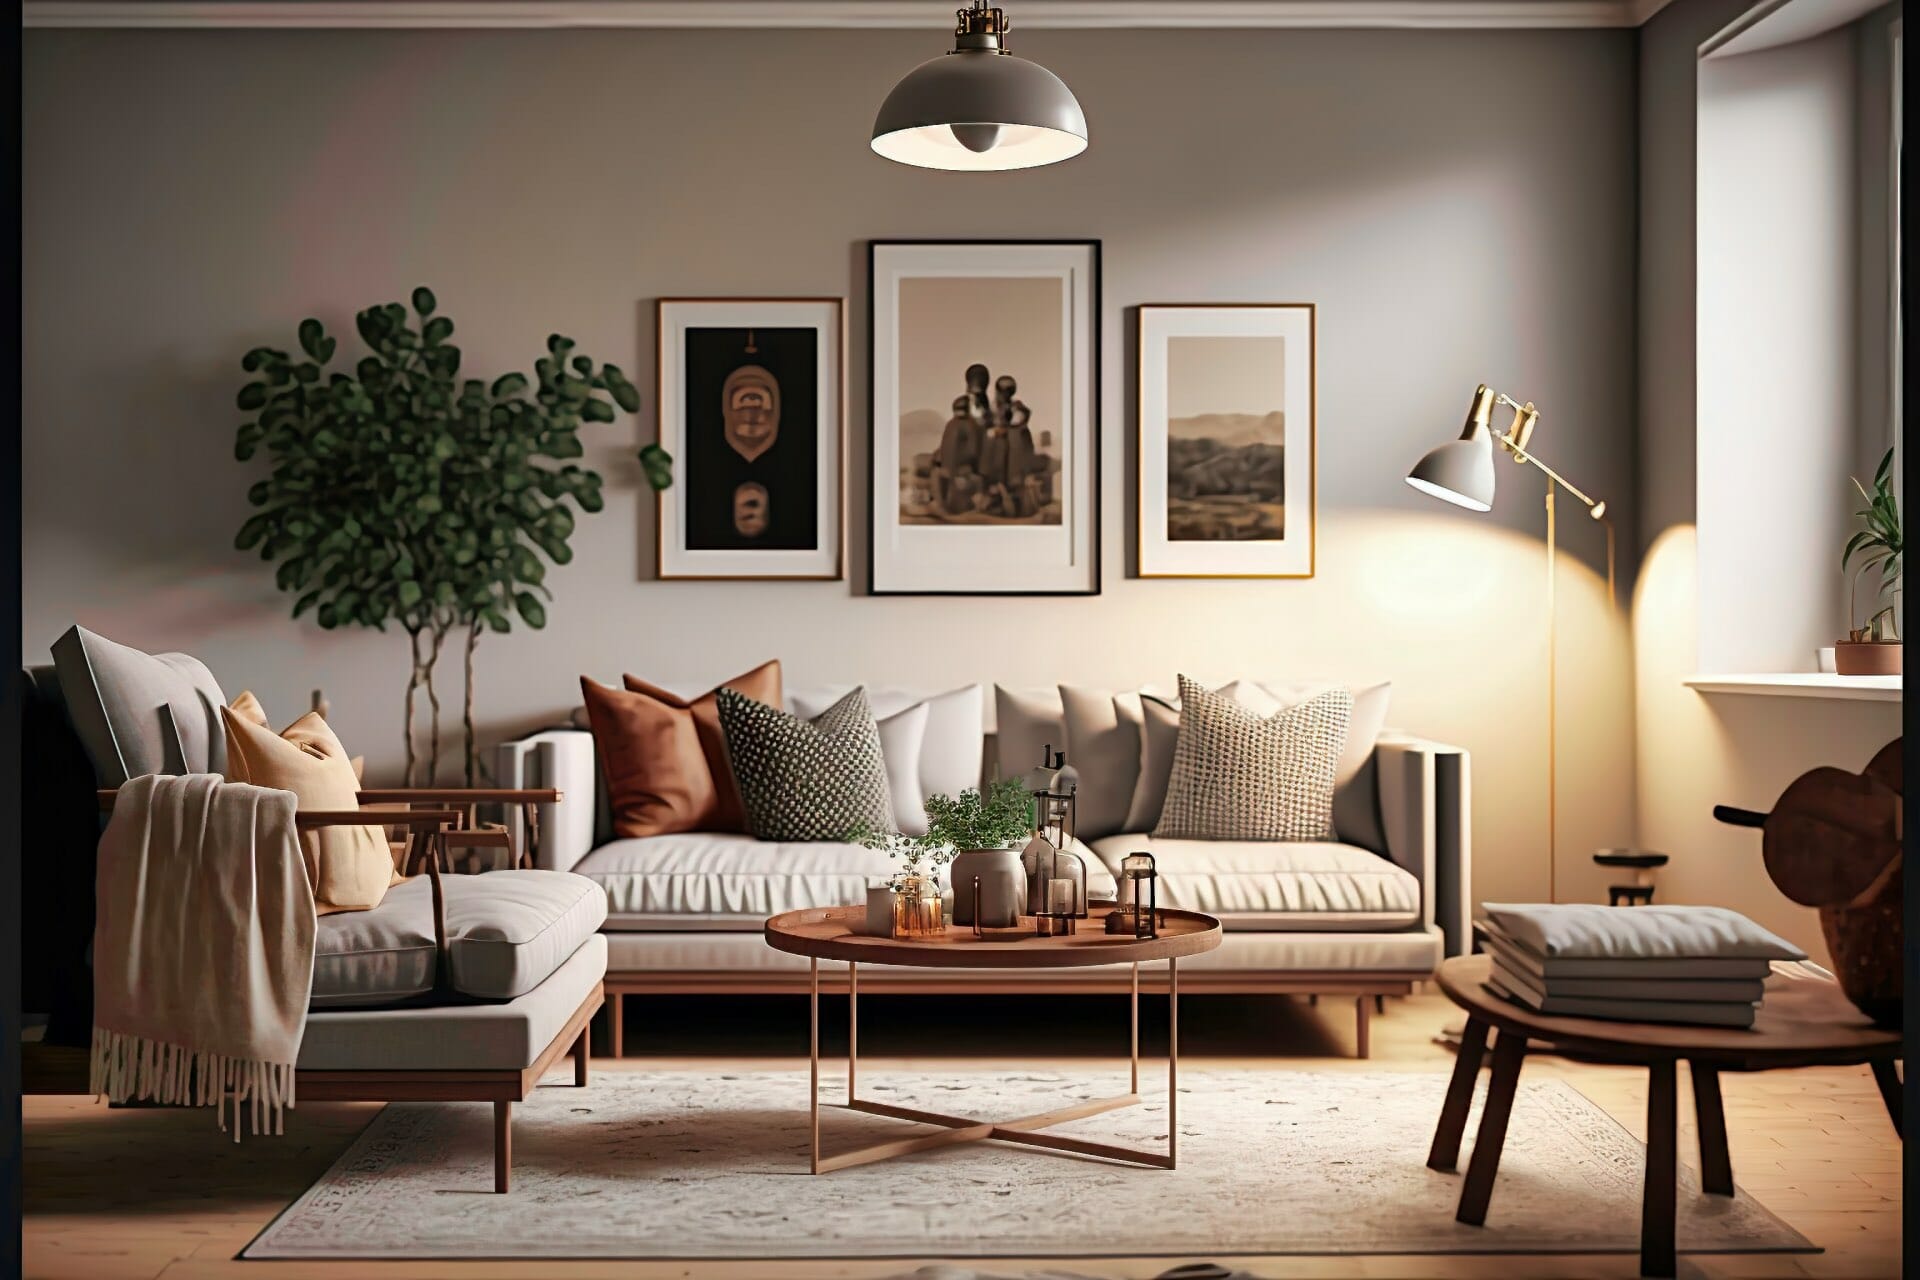 Minimalist Living Room With Artwork On Wall